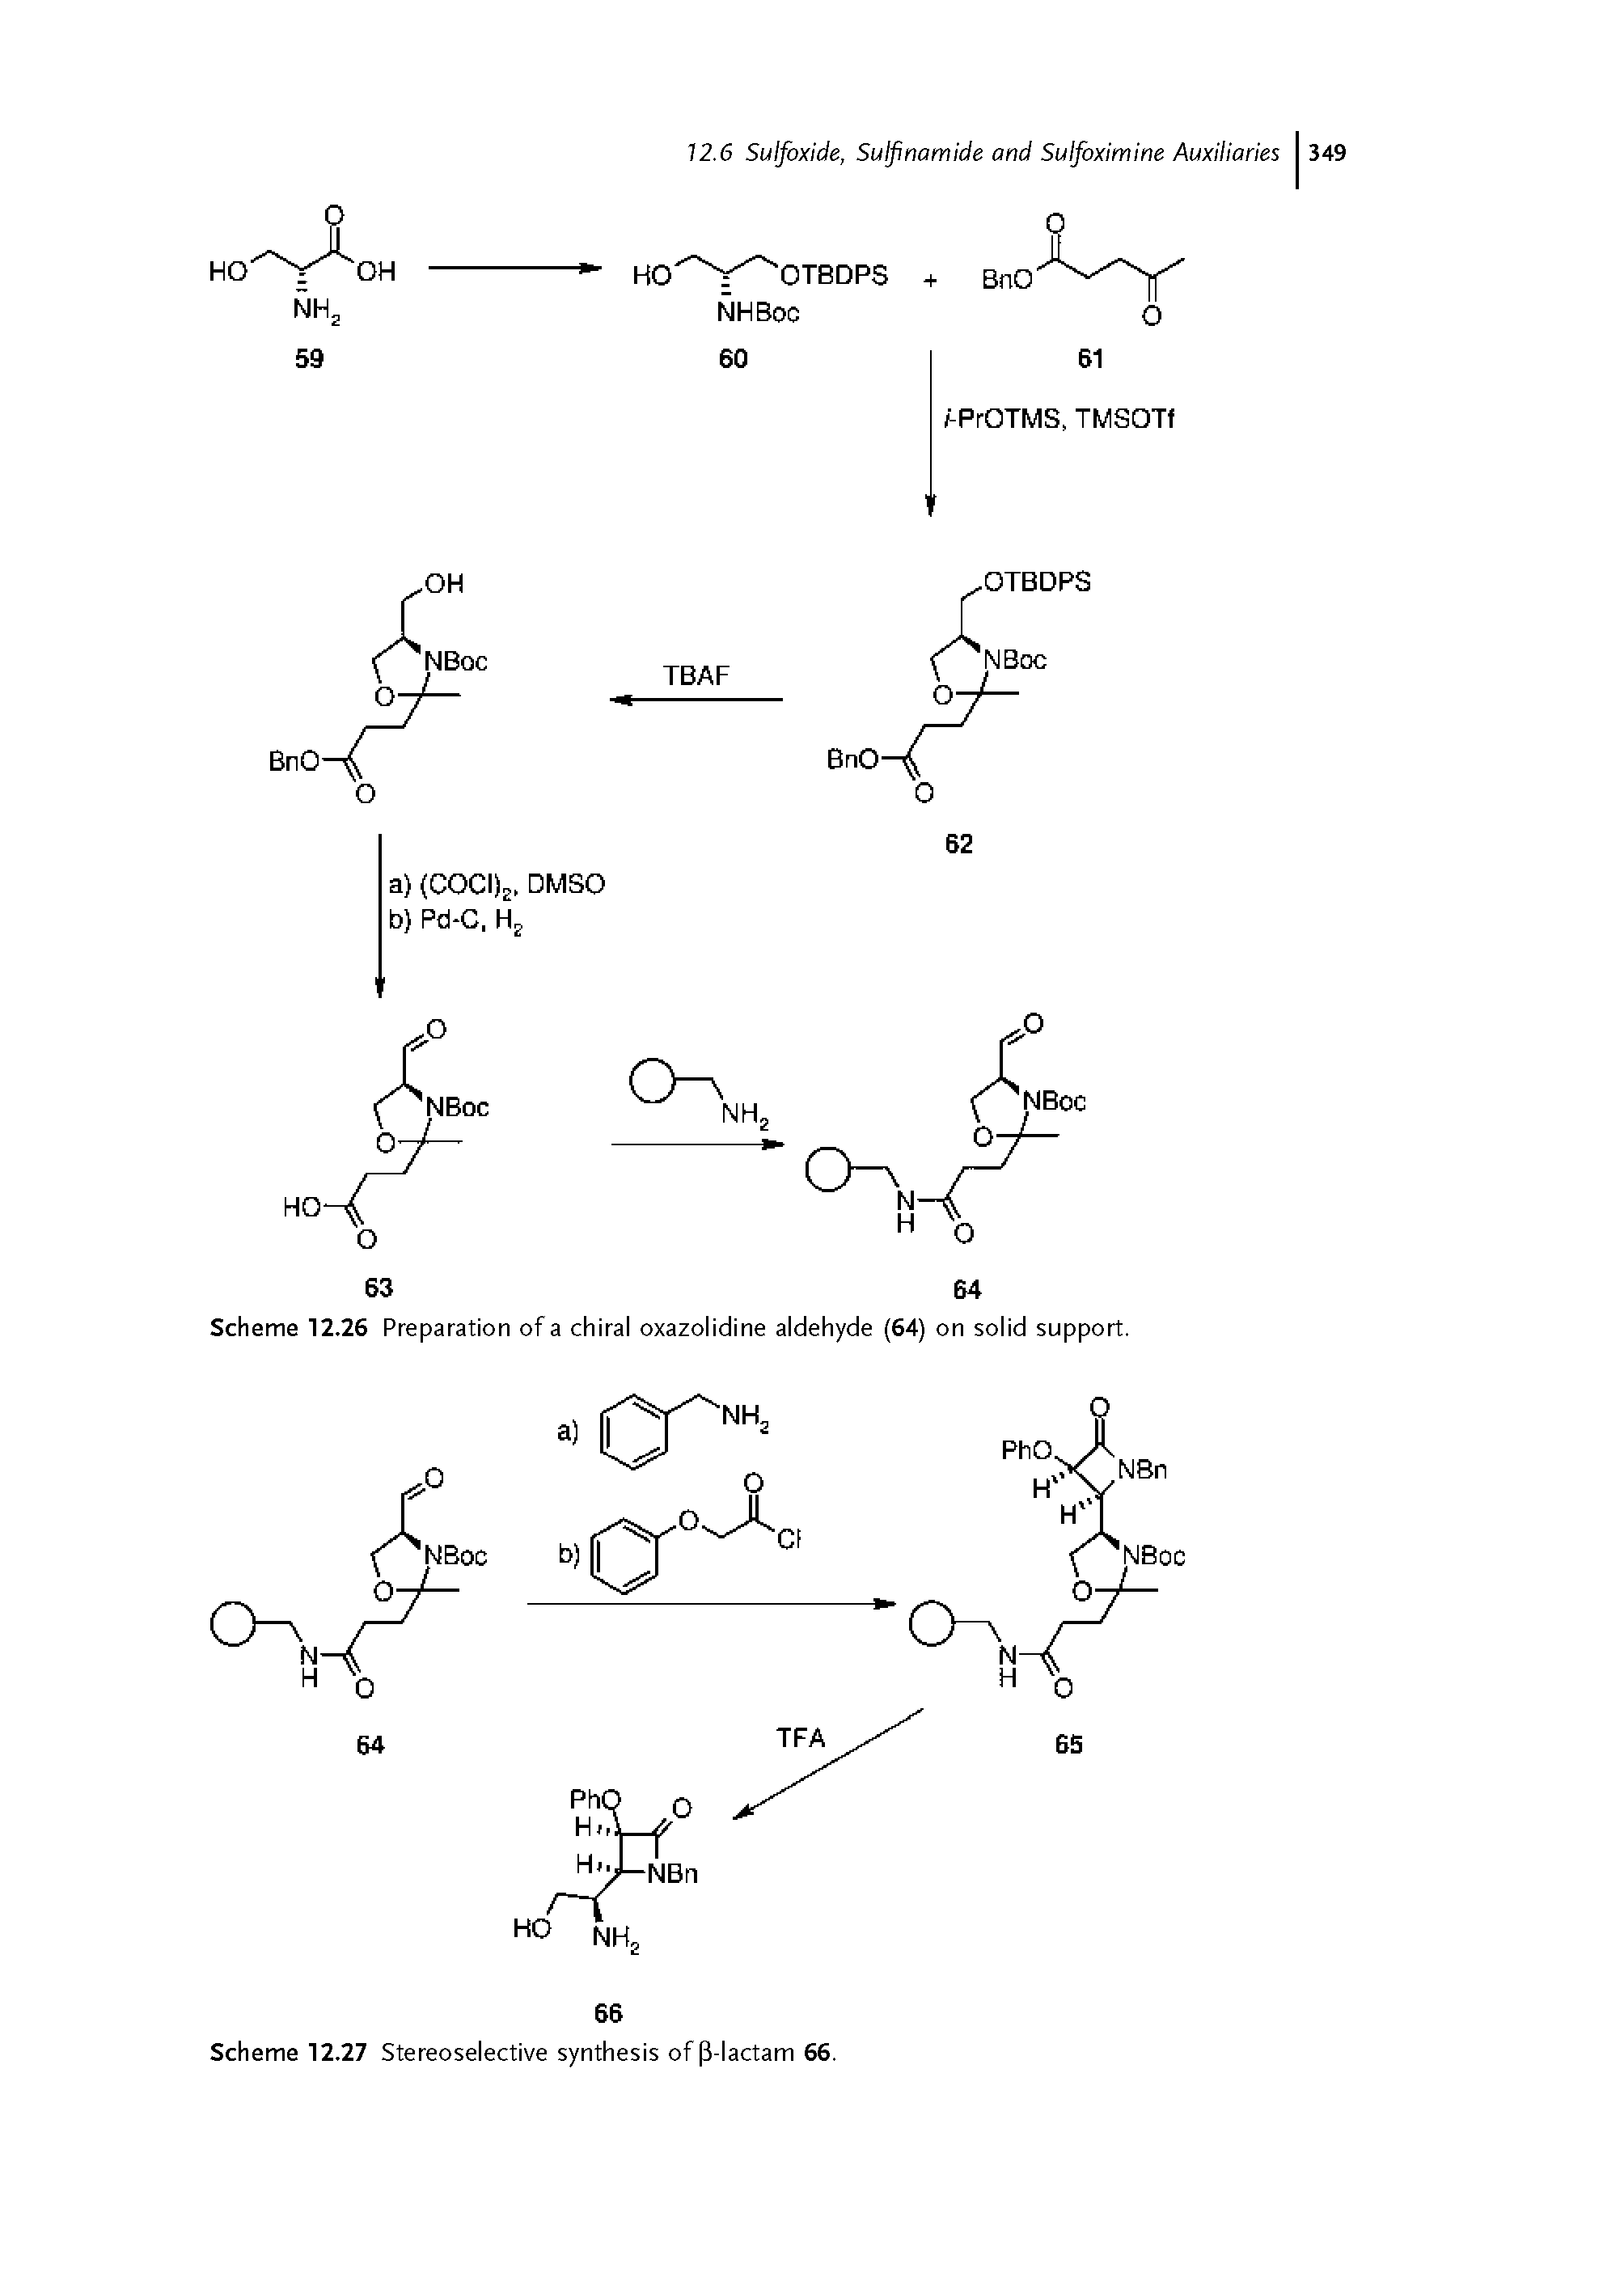 Scheme 12.26 Preparation of a chiral oxazolidine aldehyde (64) on solid support.